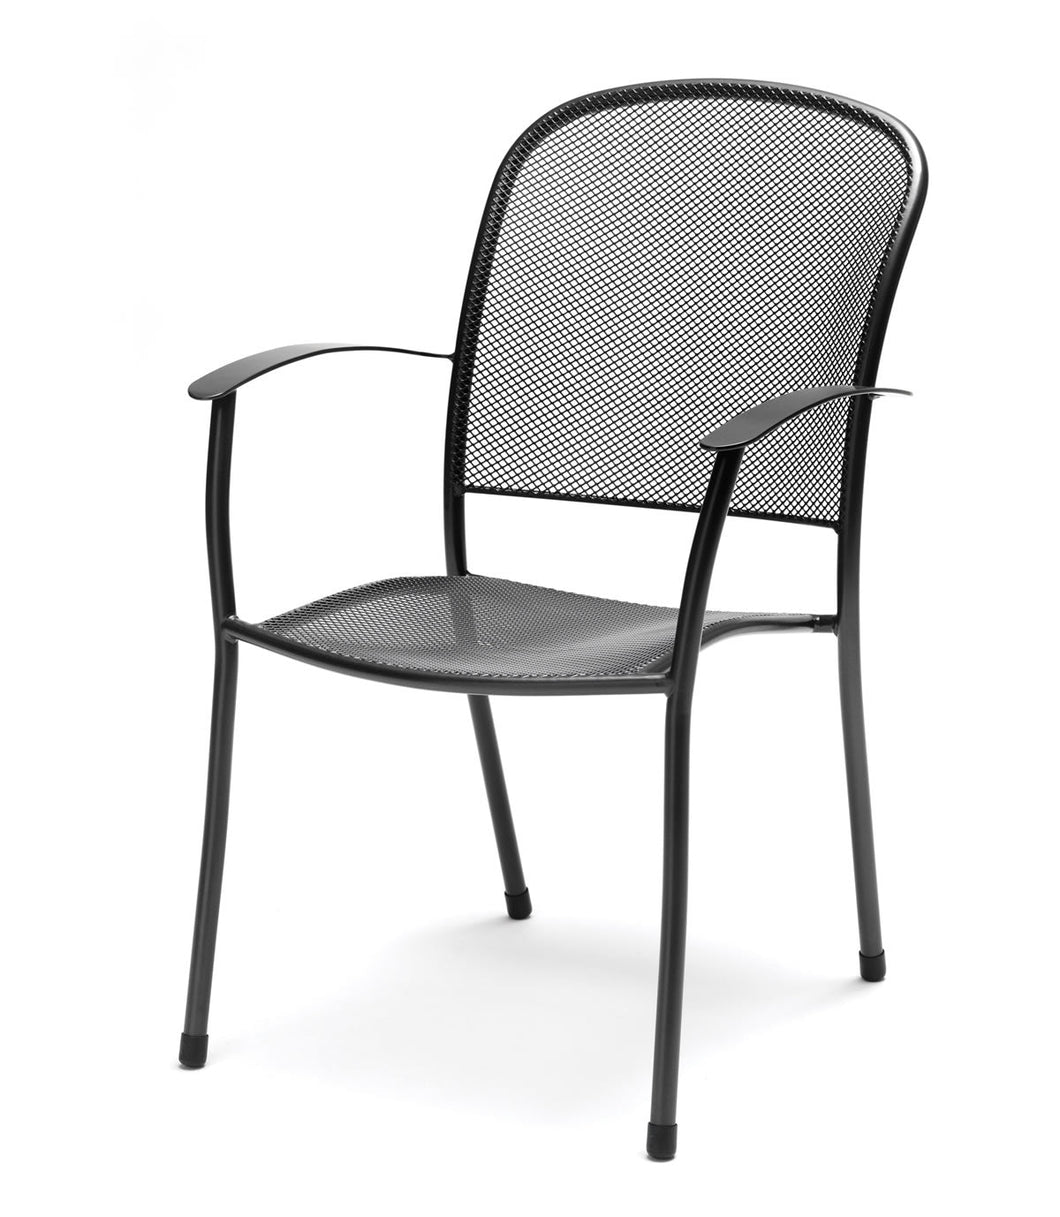 Kettler Caredo Arm Chair